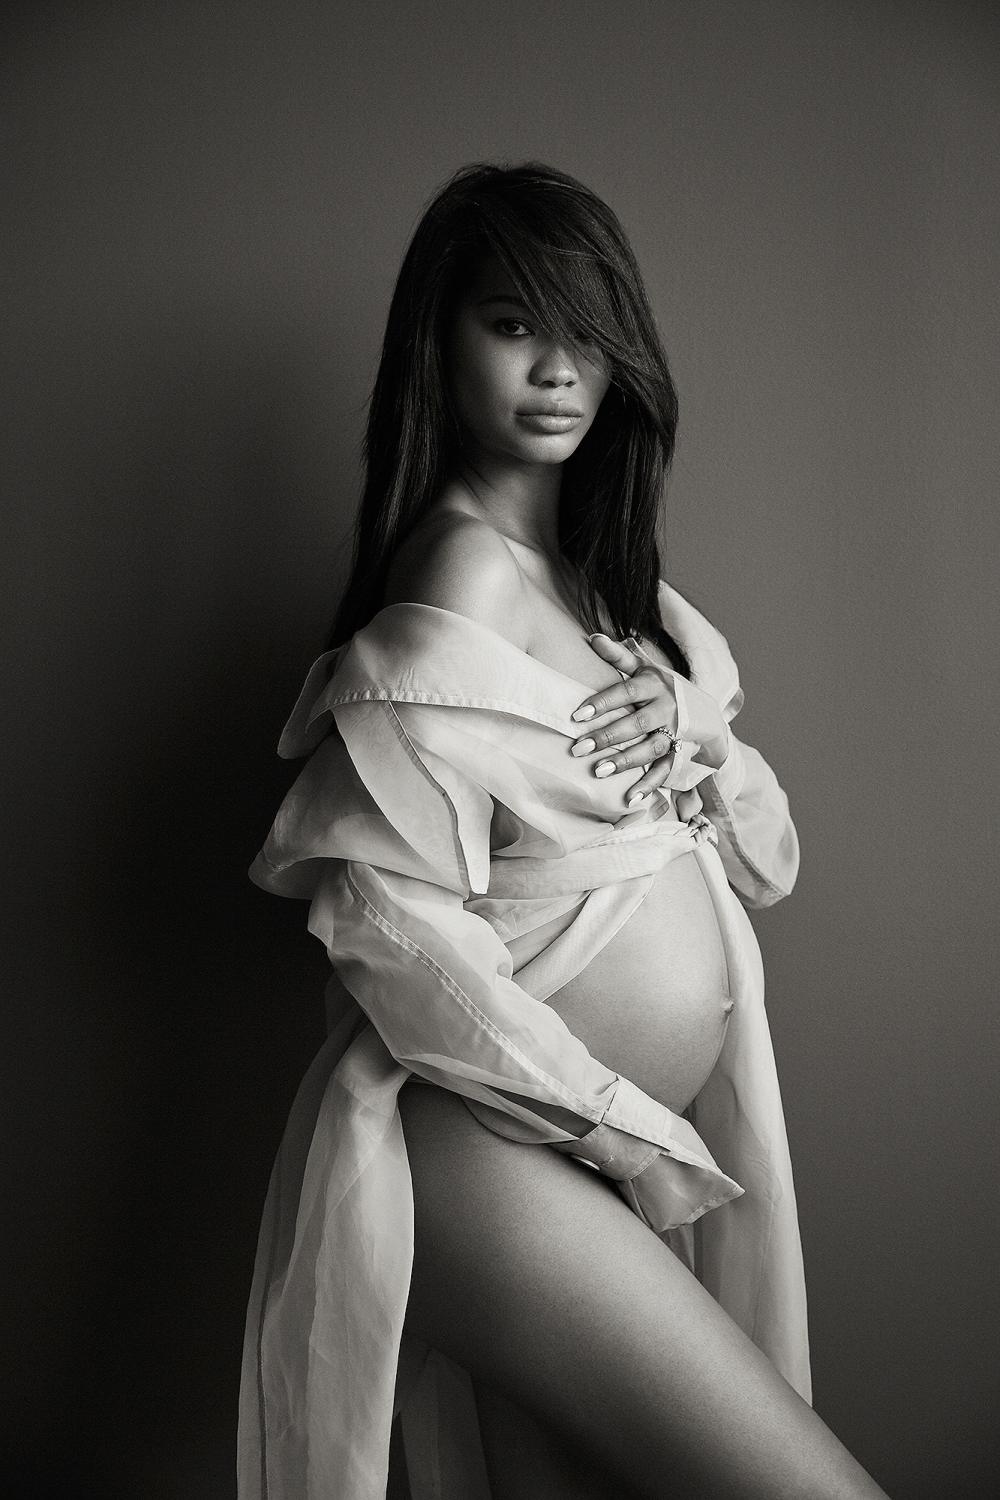 Chanel Iman, Sterling Shepard, Pregnant